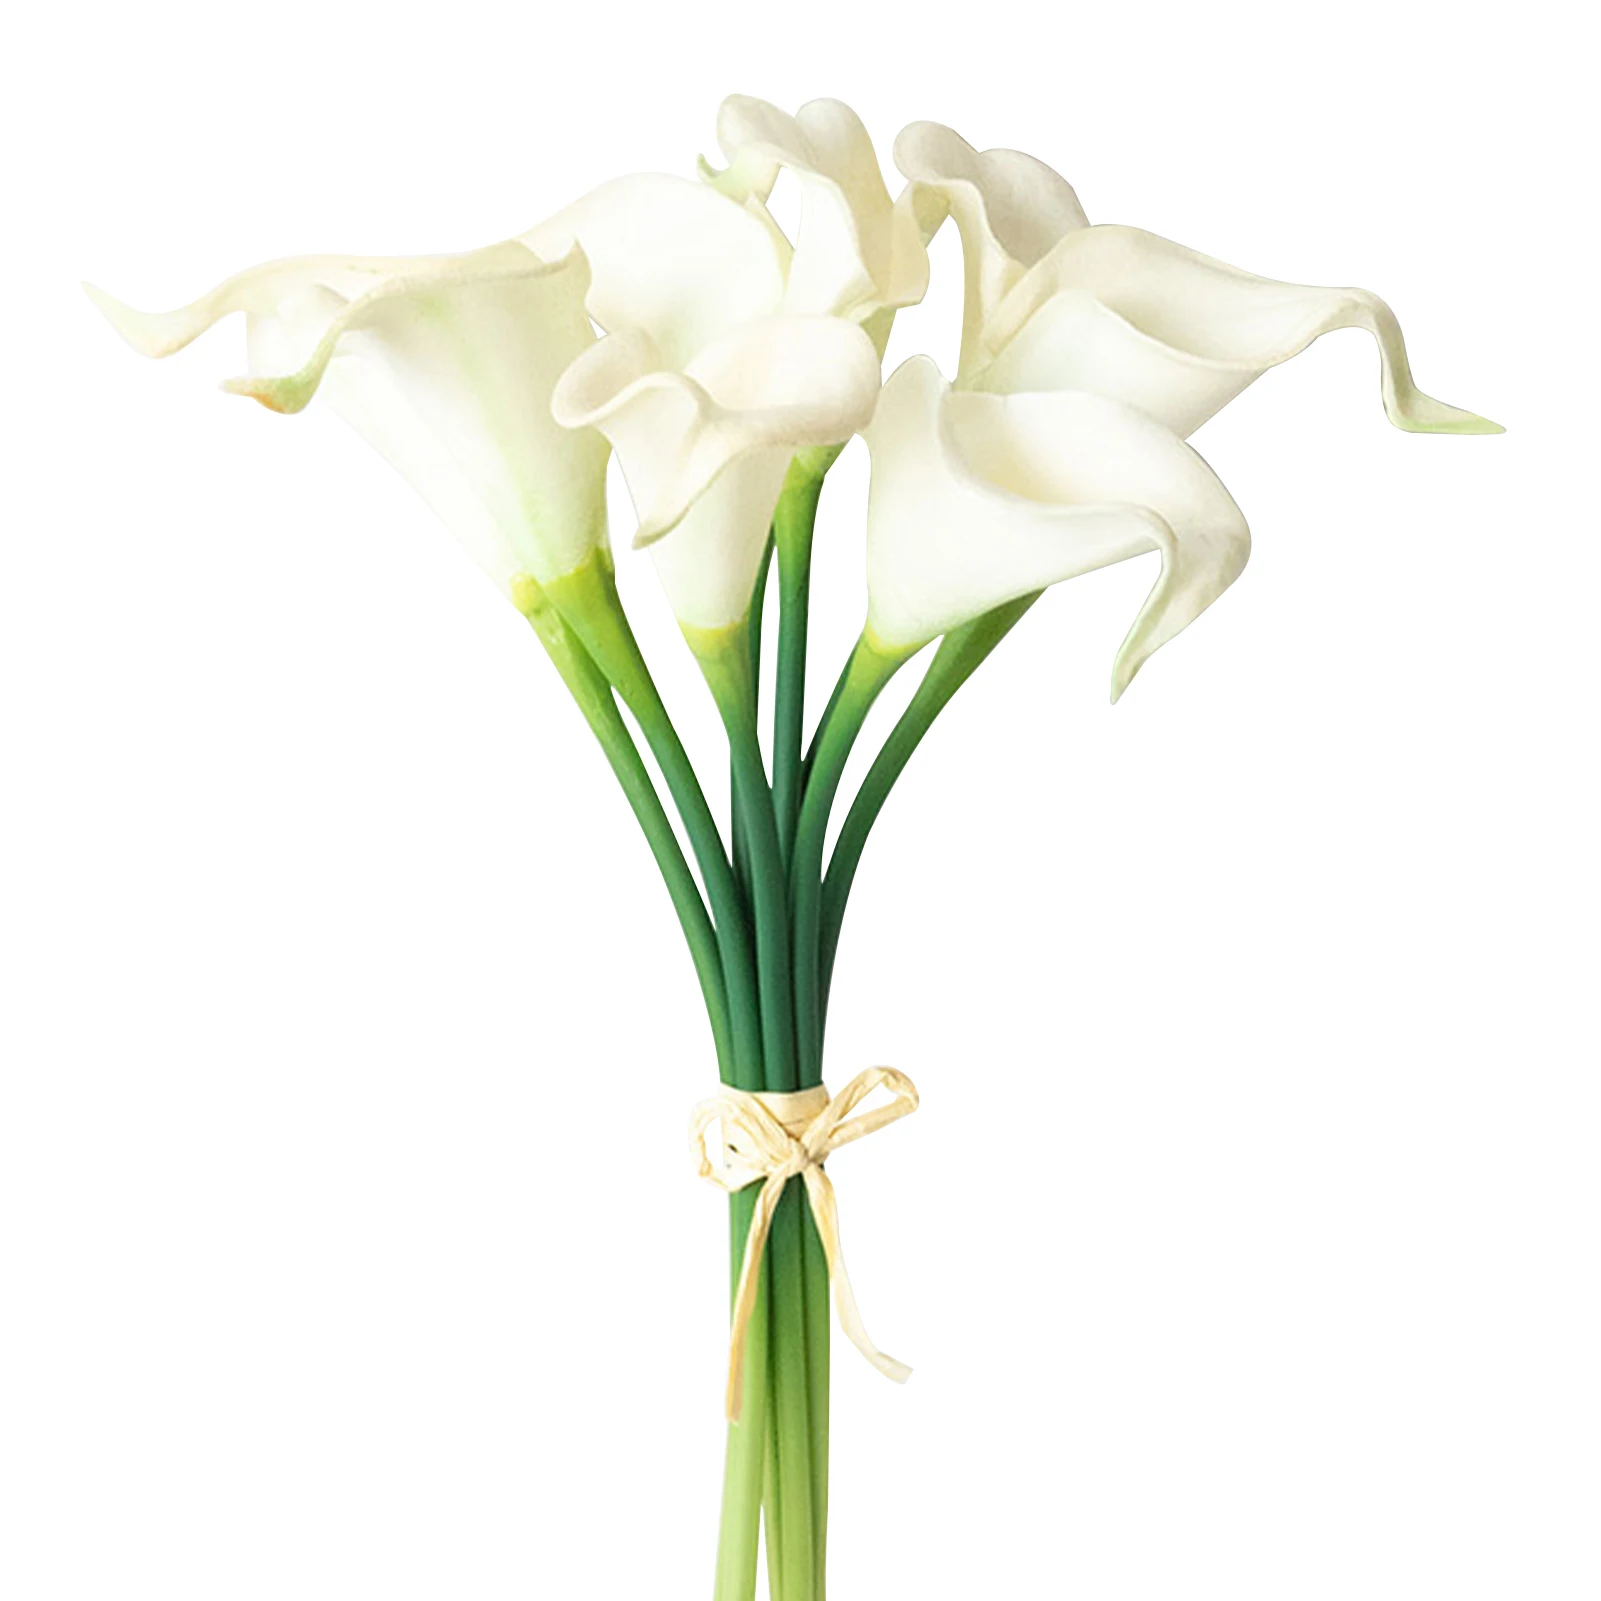 

8pcs/bundle Wedding Gift Arrangement Home Decor Durable Calla Lily Artificial Flower For Vase Living Room Photo Props Party